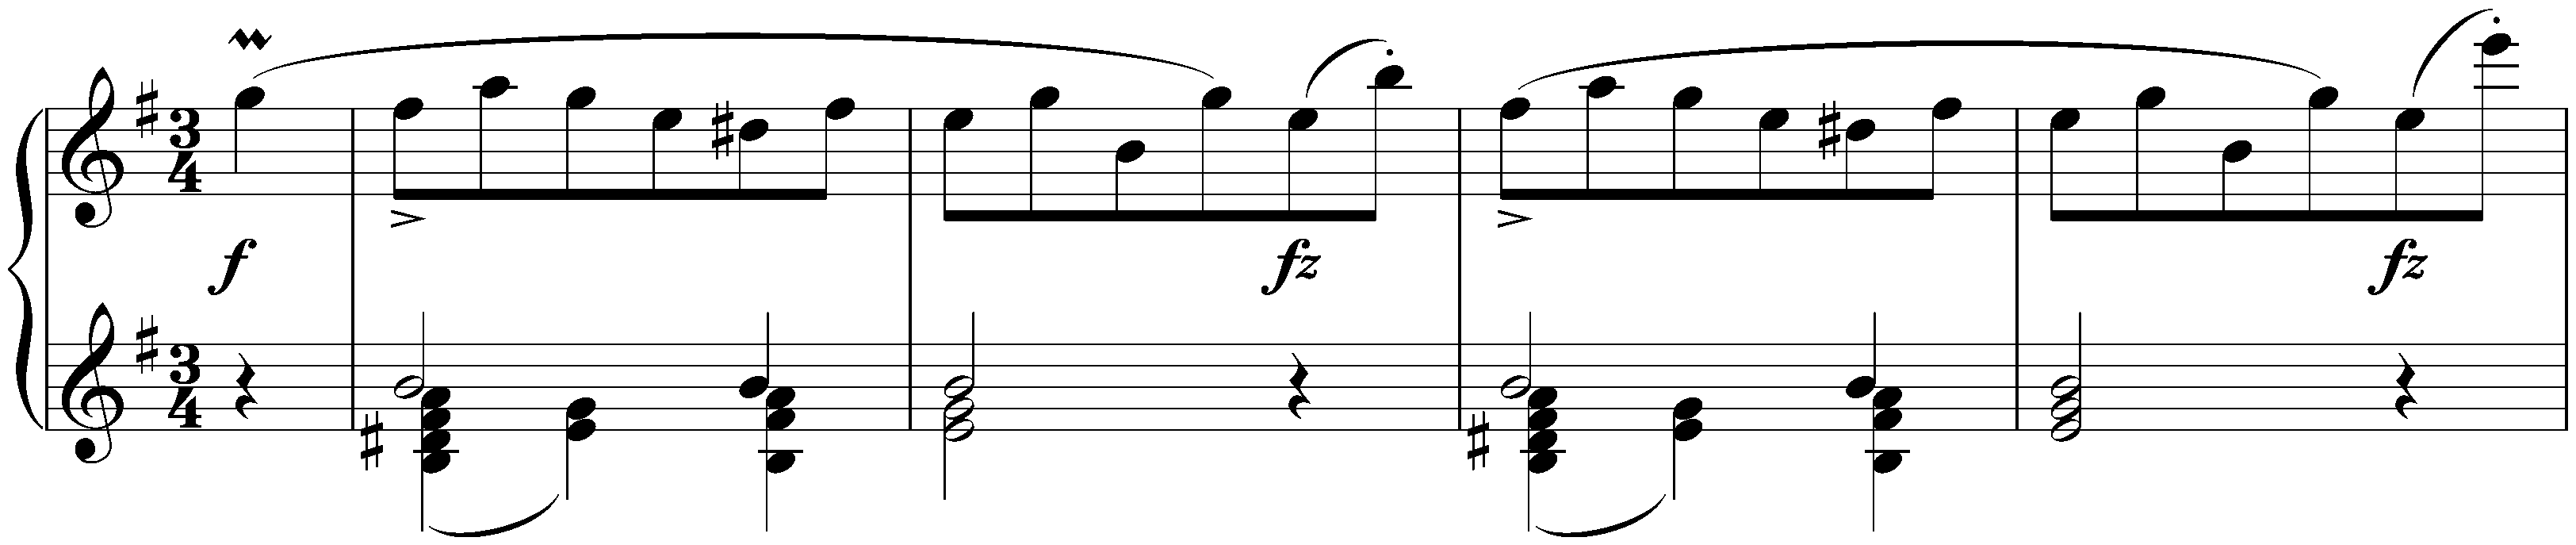 Sixteen deutsche Tänze and two Ecossaises, D 783; 11. Sixteen deutsche Tänze, no. 11 in G major